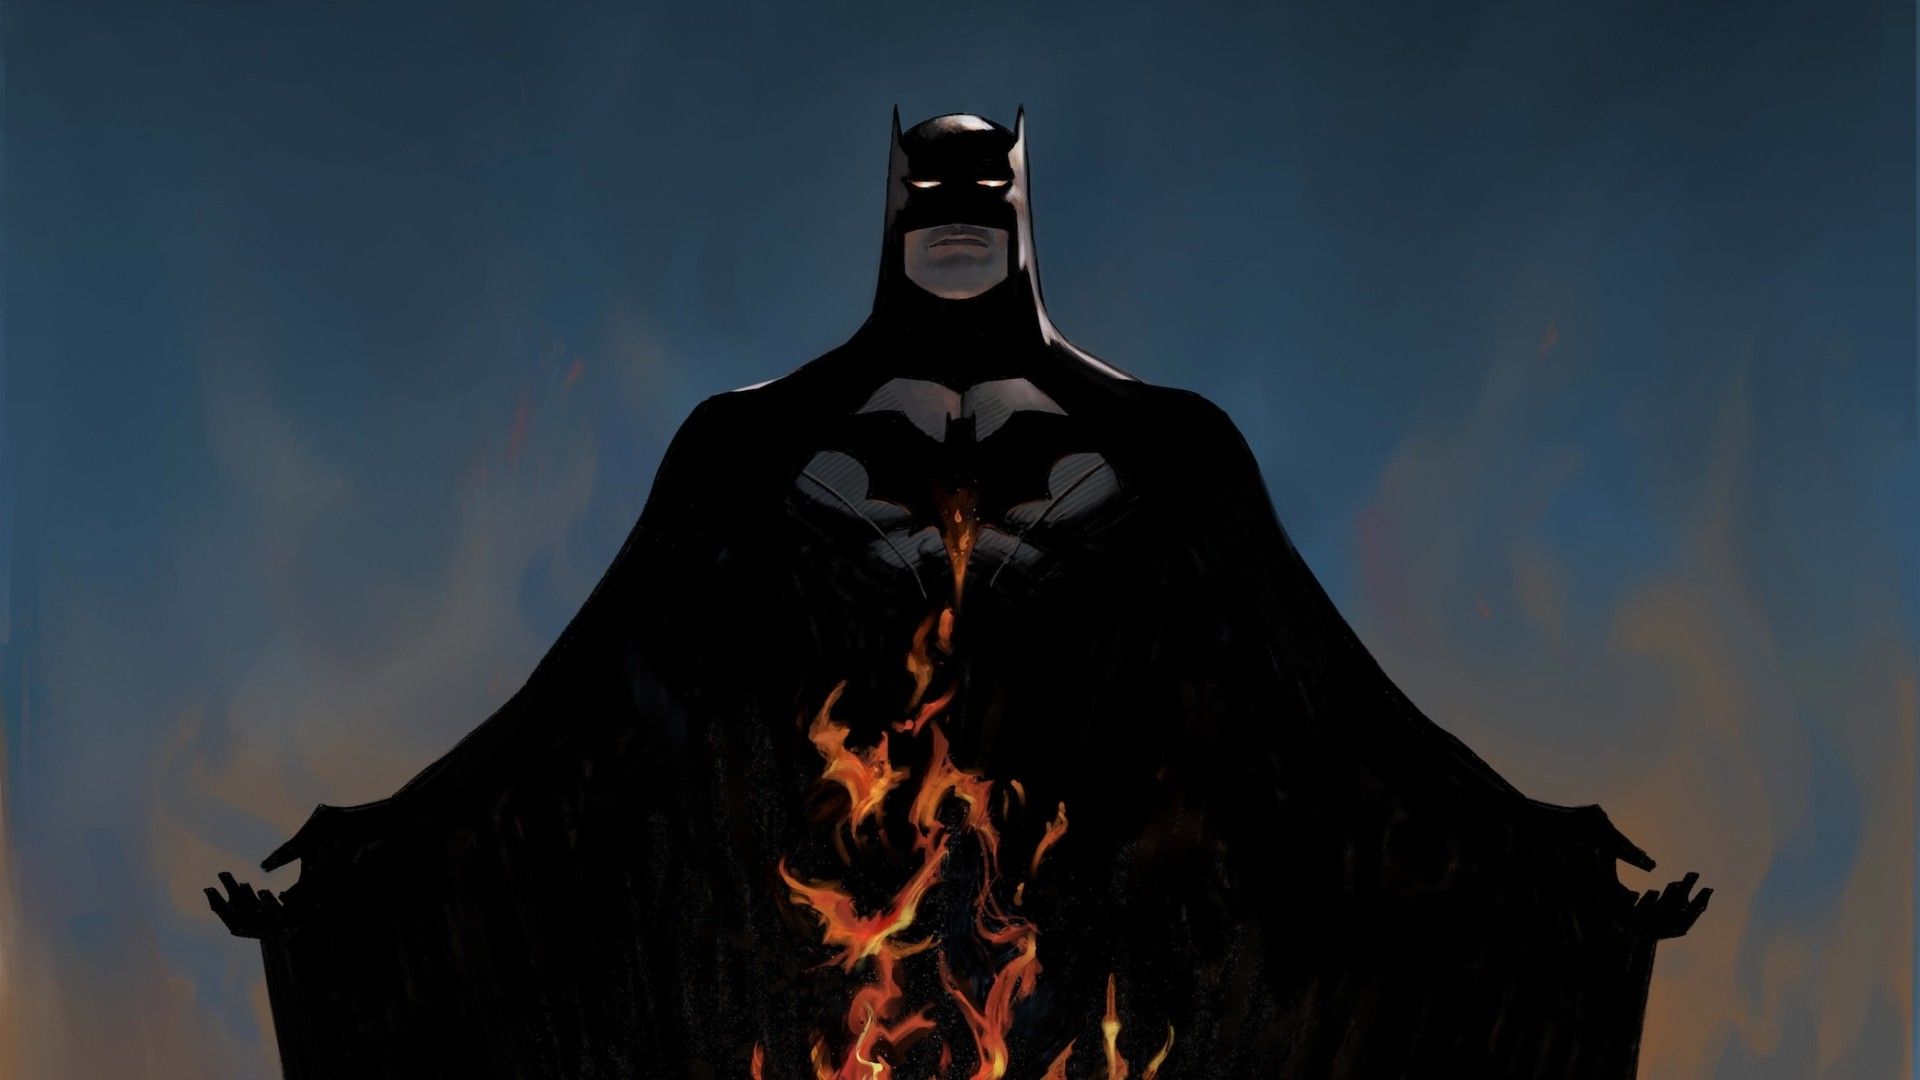 Wallpapers of Batman or Dark Knight a DC comic figur in HD